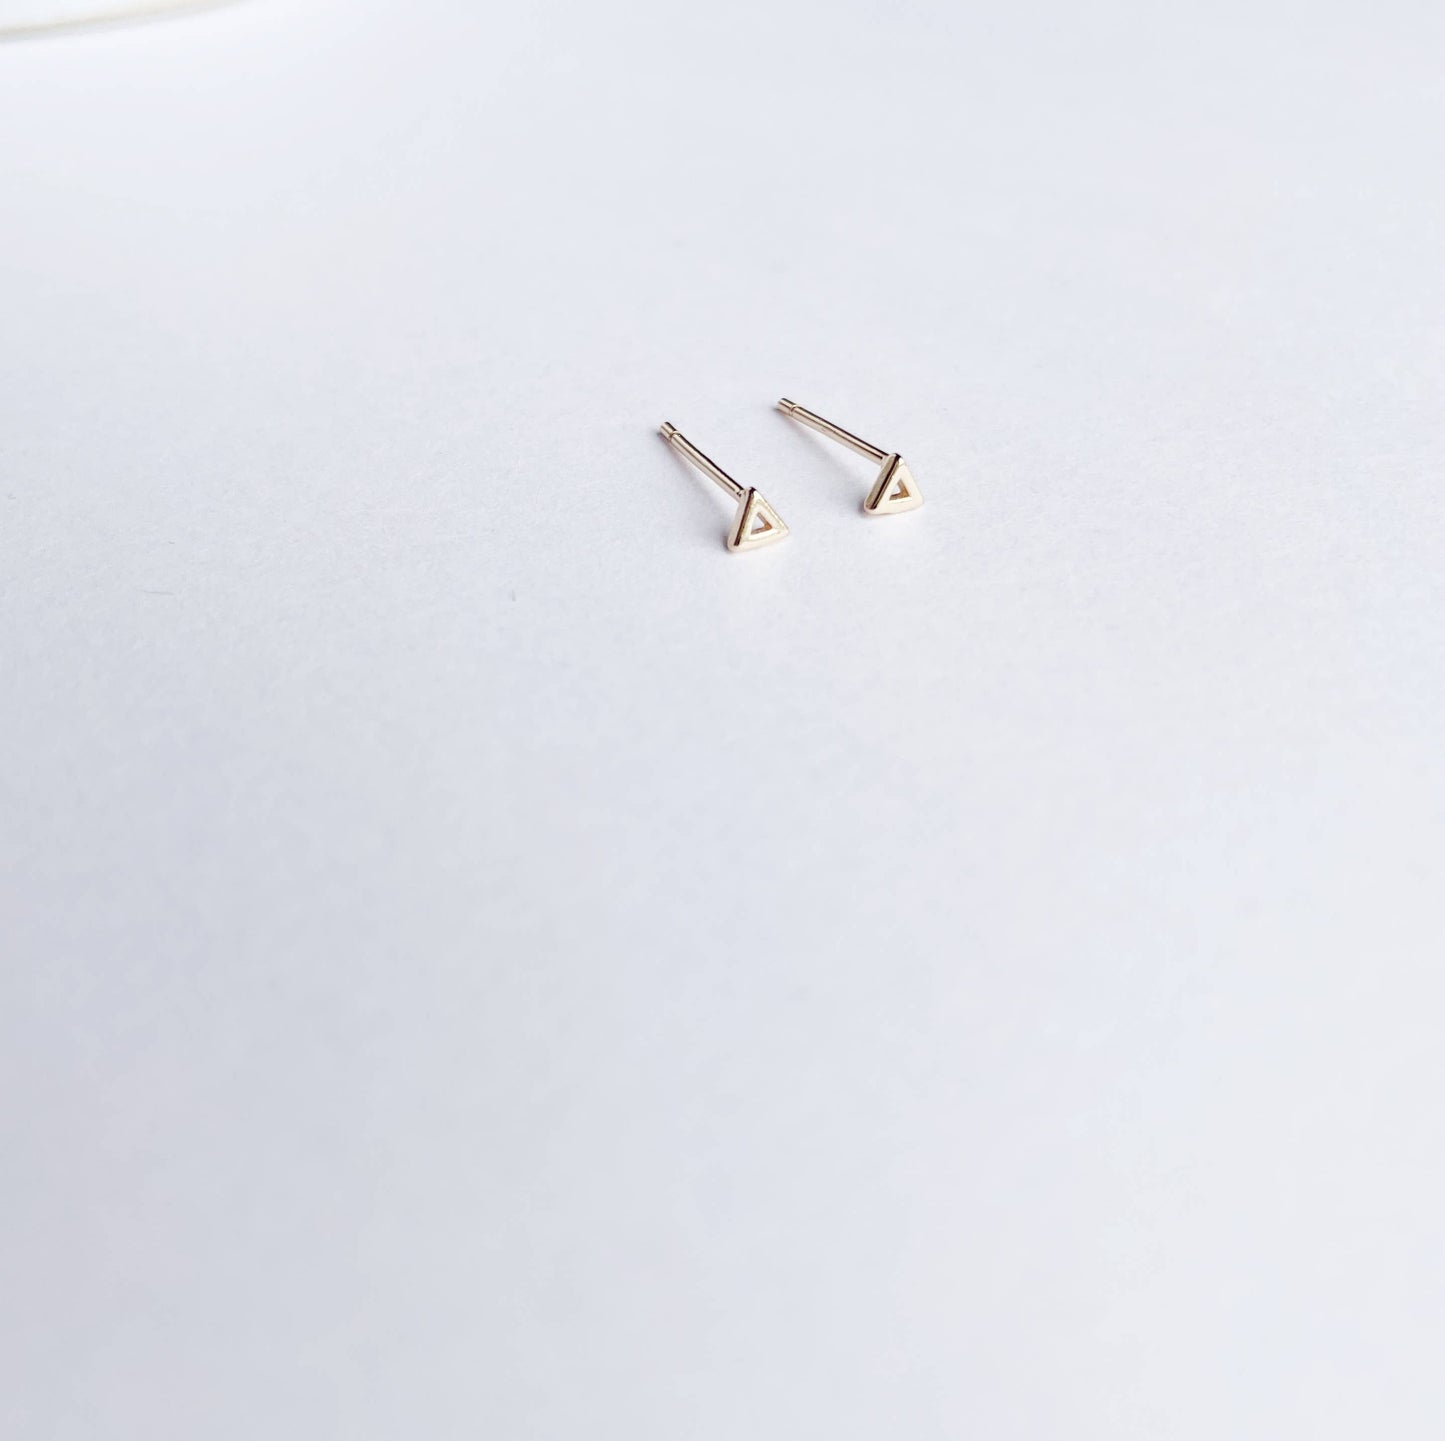 Tiny Tiny Gold Studs Earrings - Tiny Gold Open Triangles